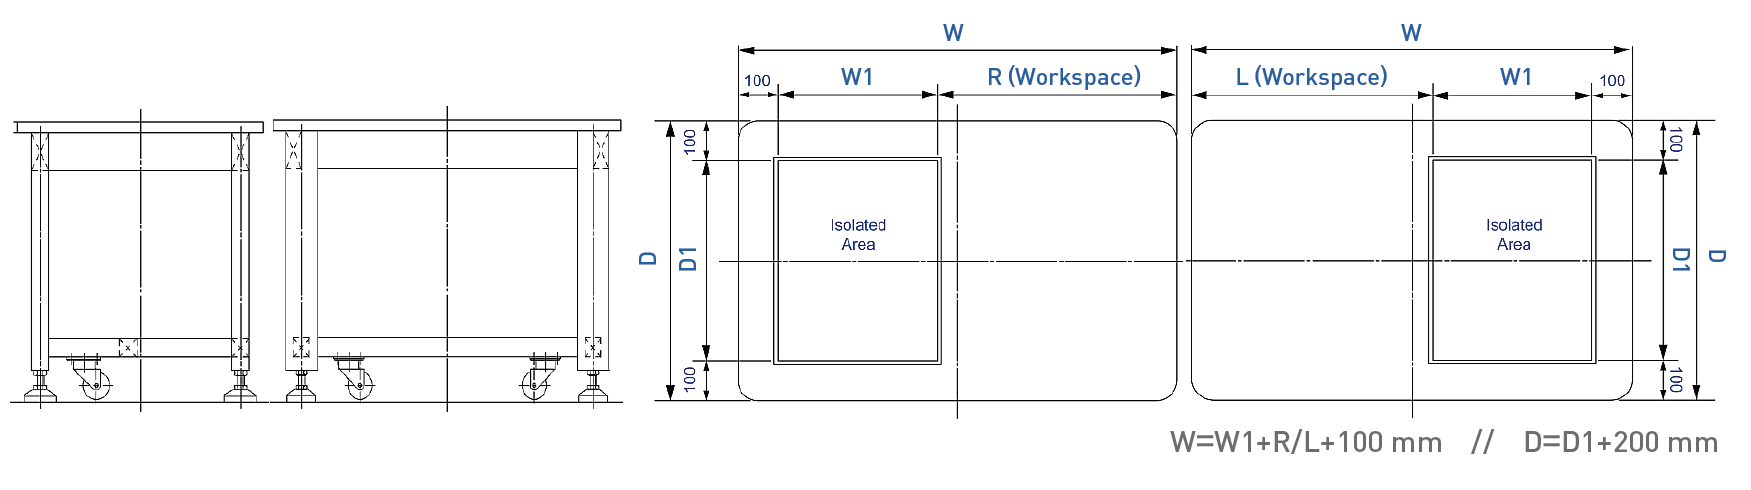 DVID-L-Workspace-Type